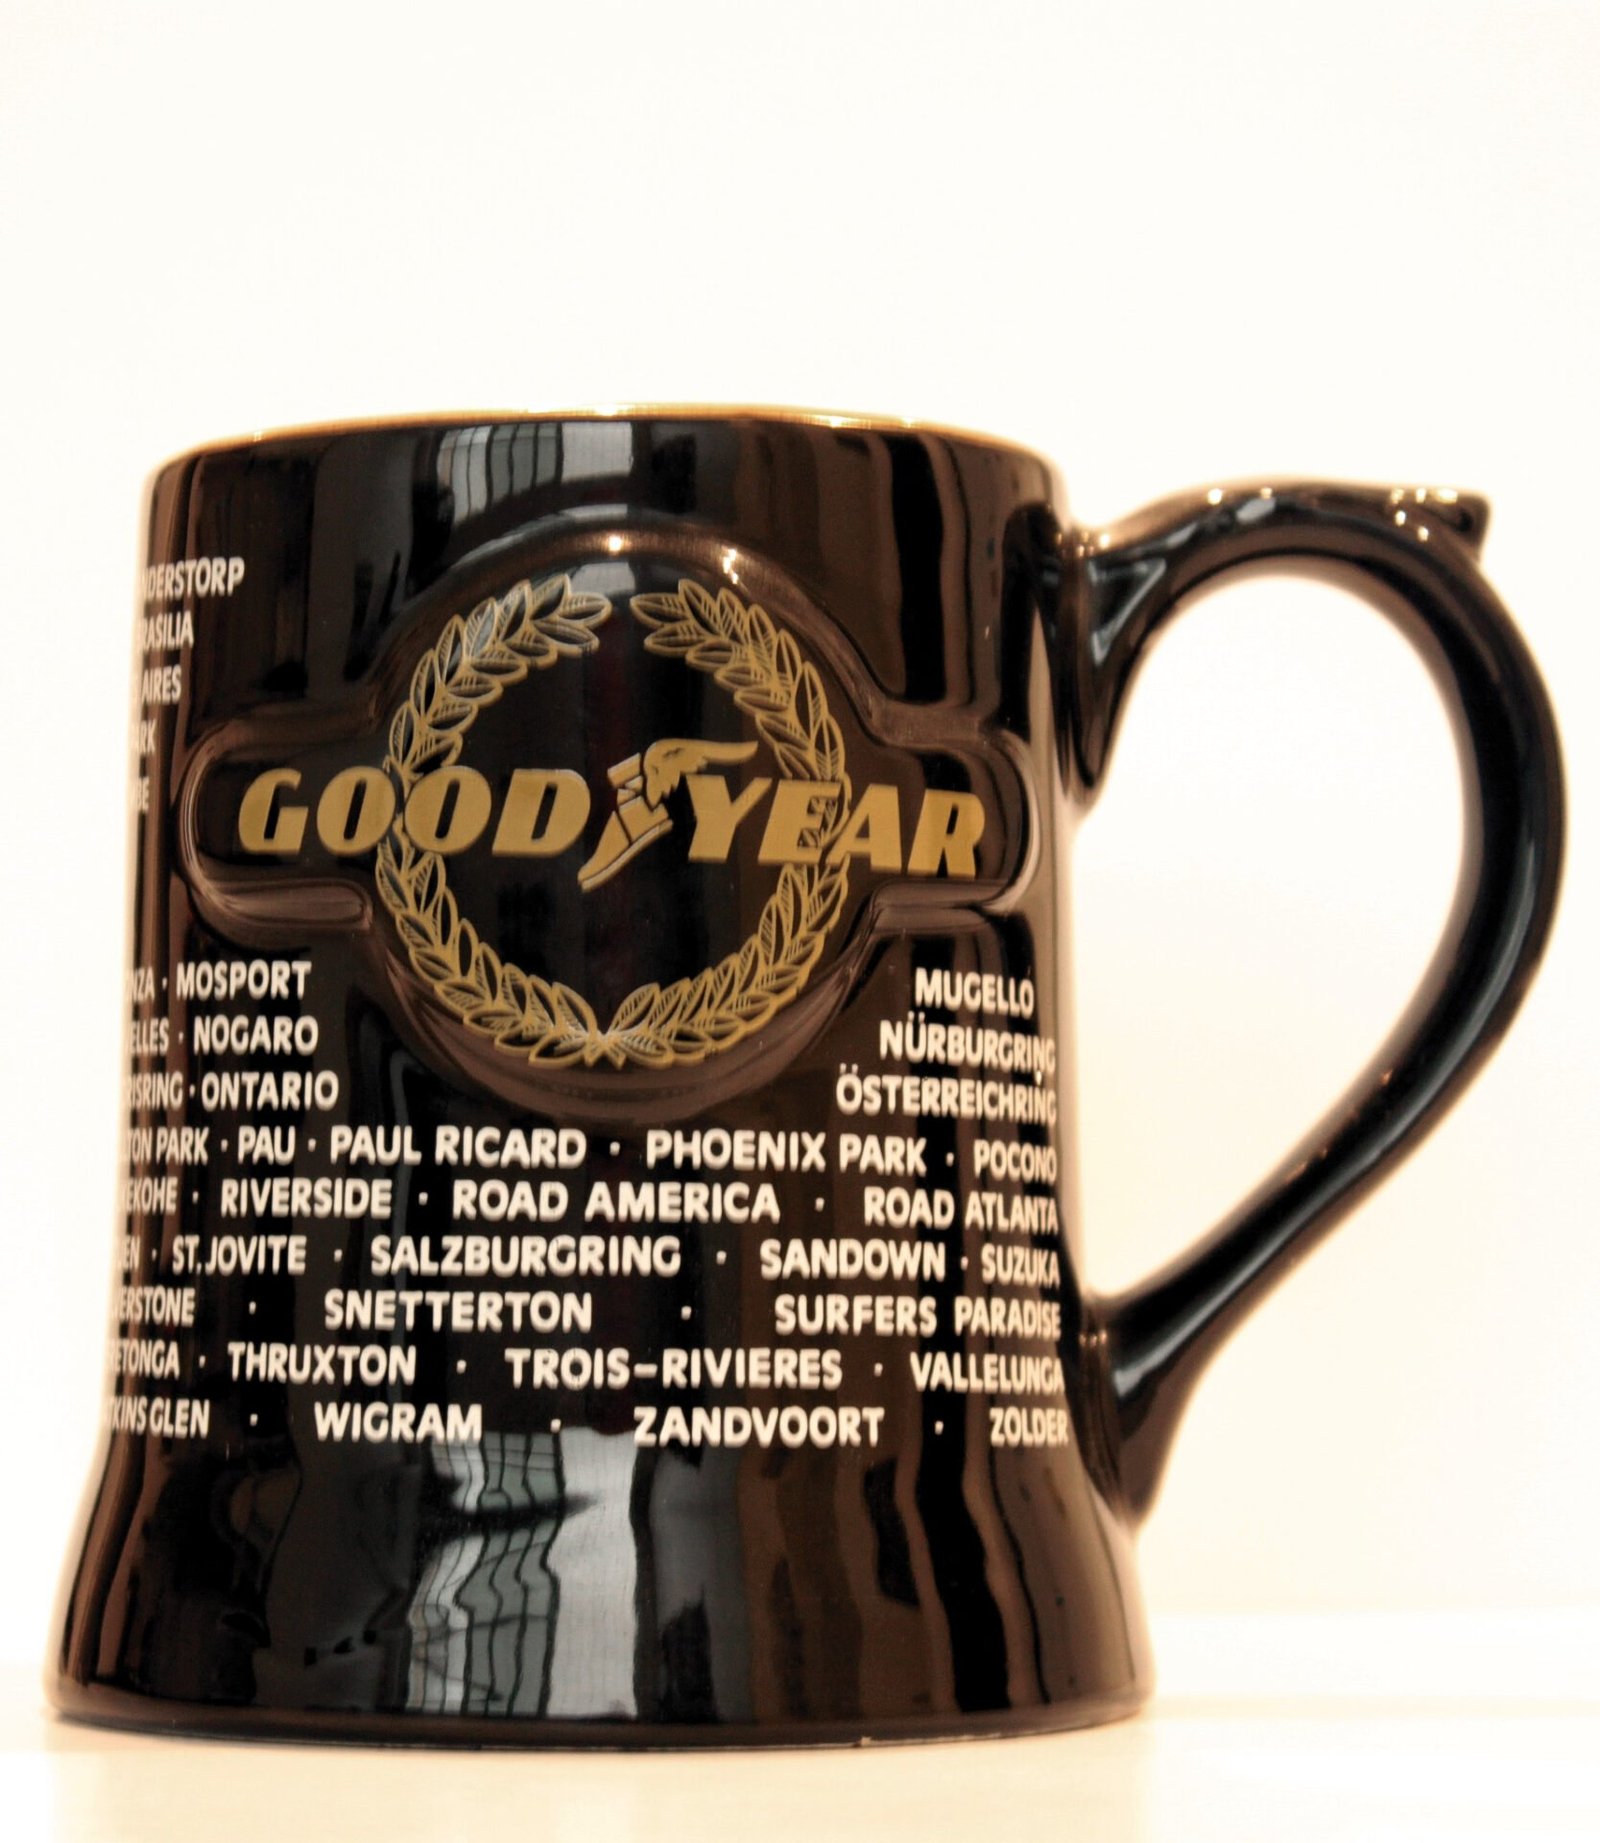 GoodYear mug